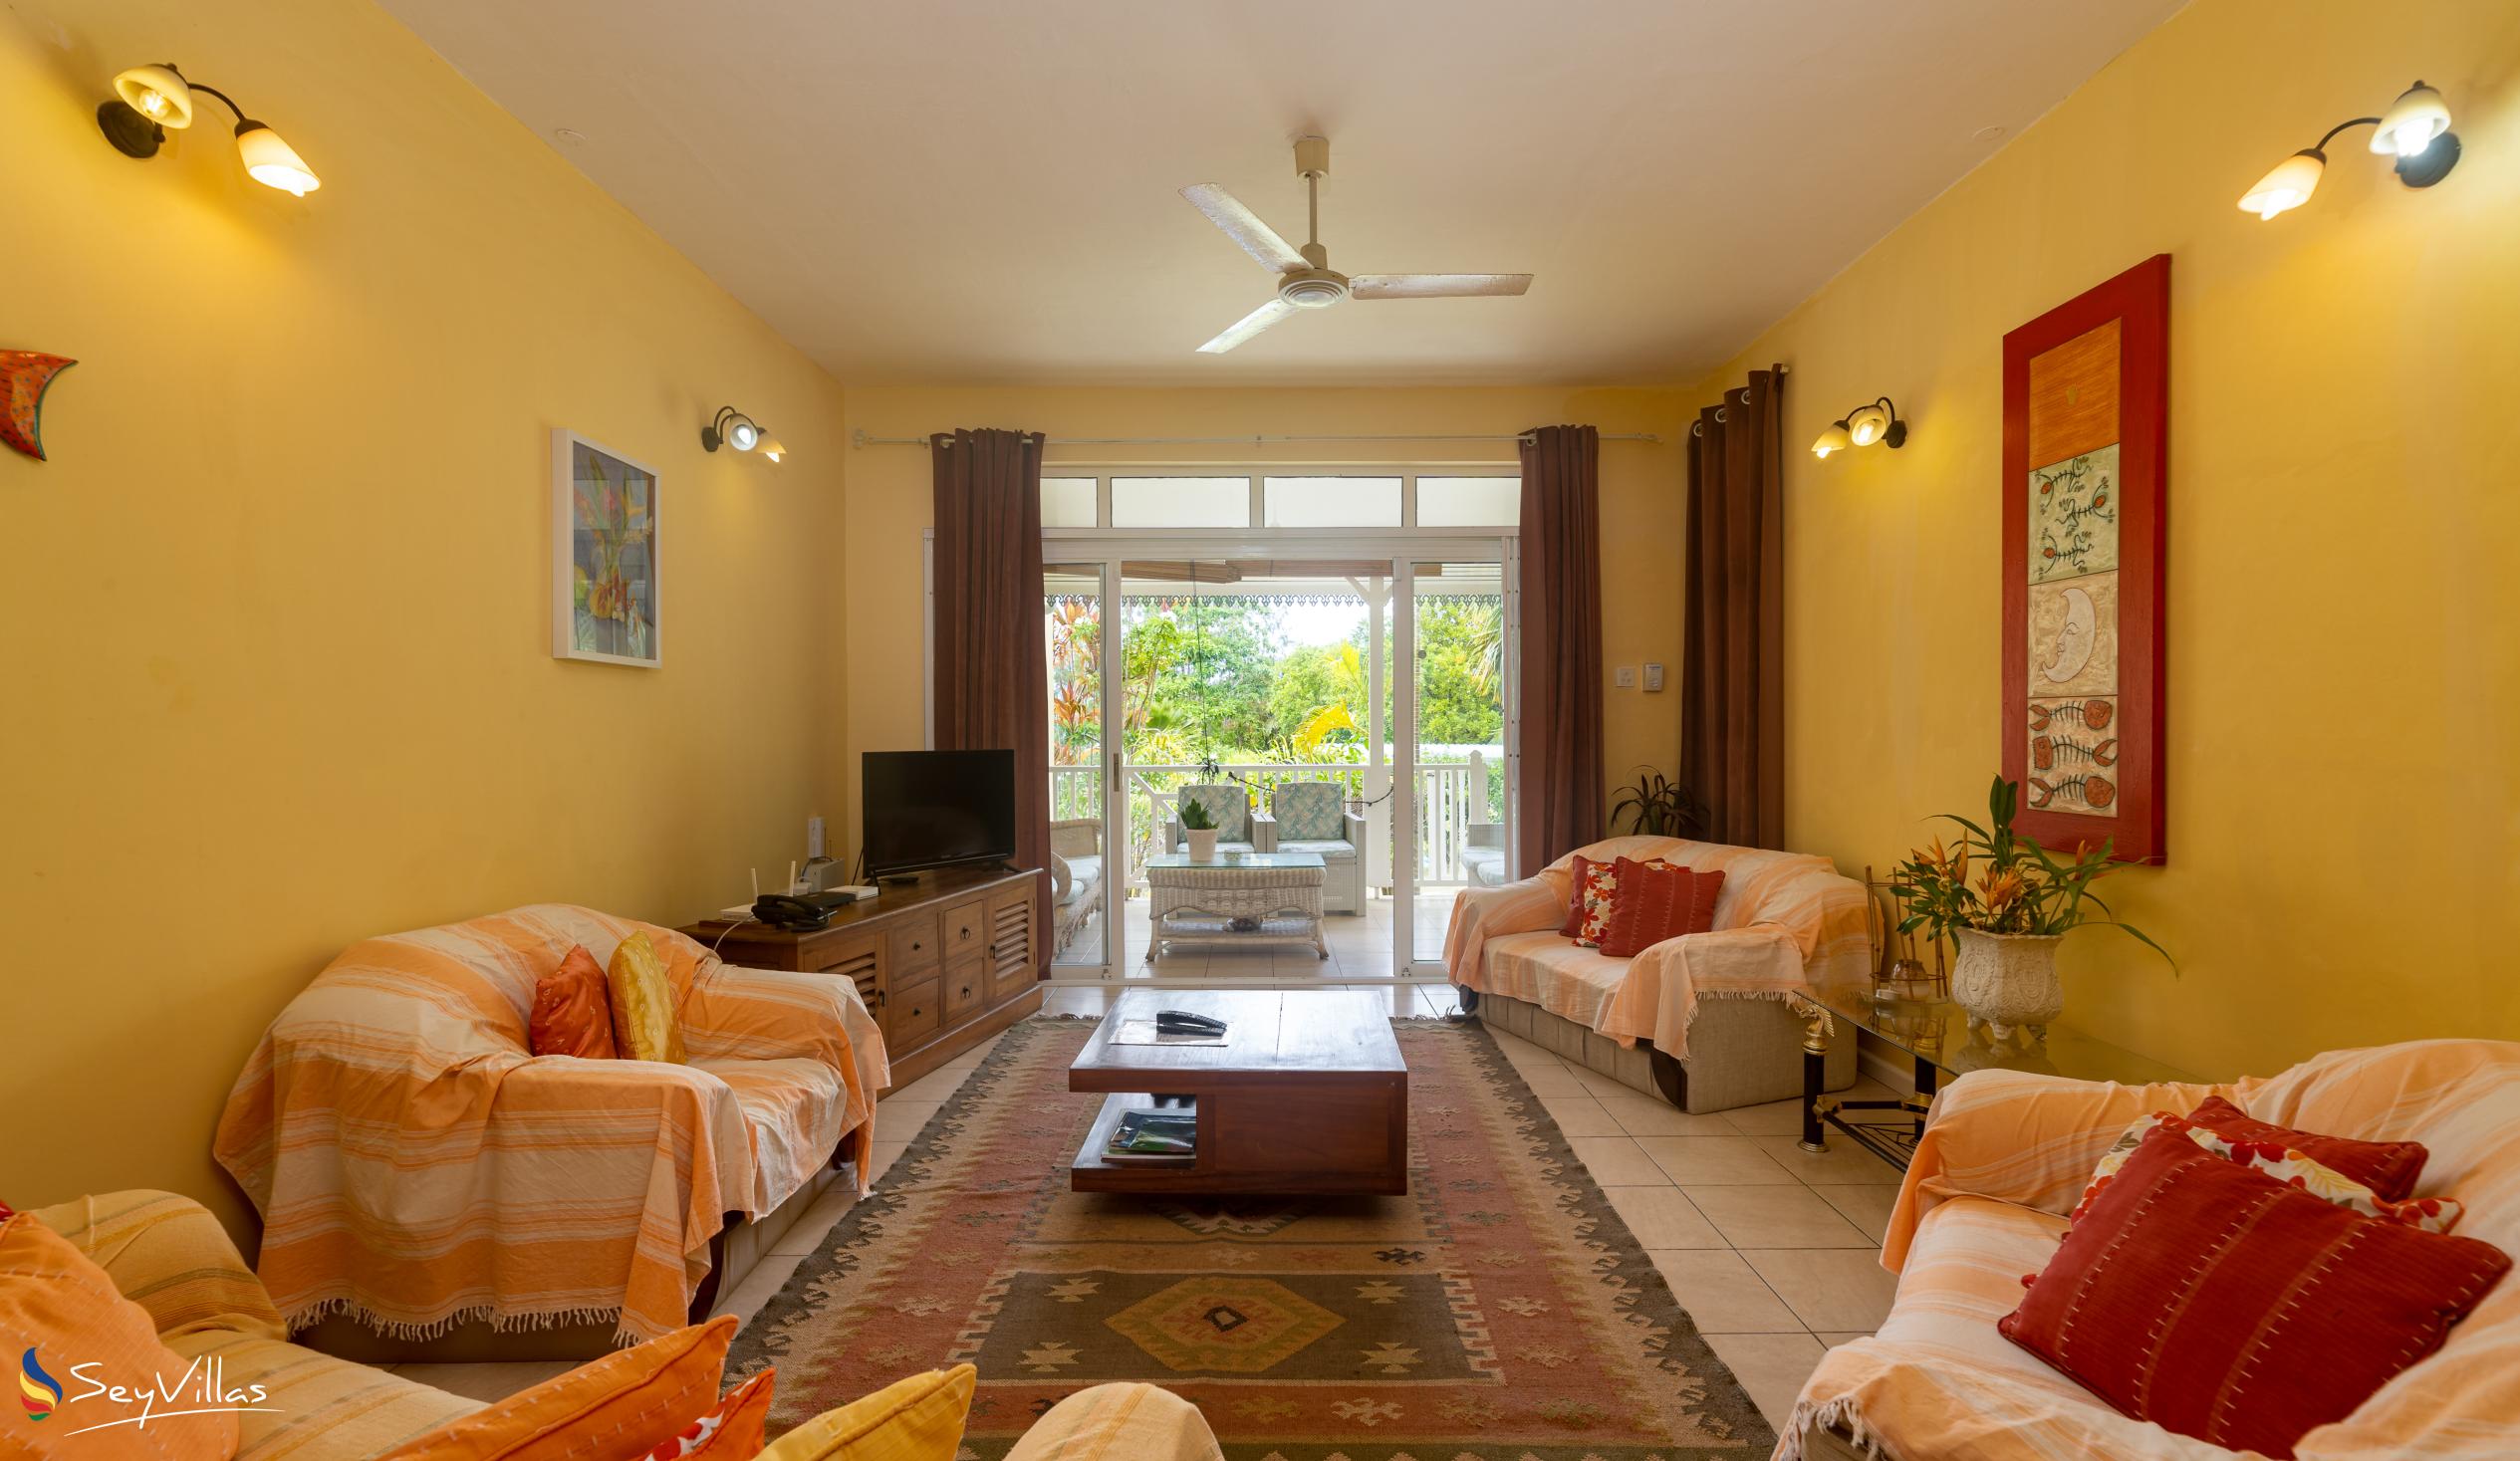 Photo 88: Residence Monte Cristo - 3-Bedroom Duplex - Mahé (Seychelles)